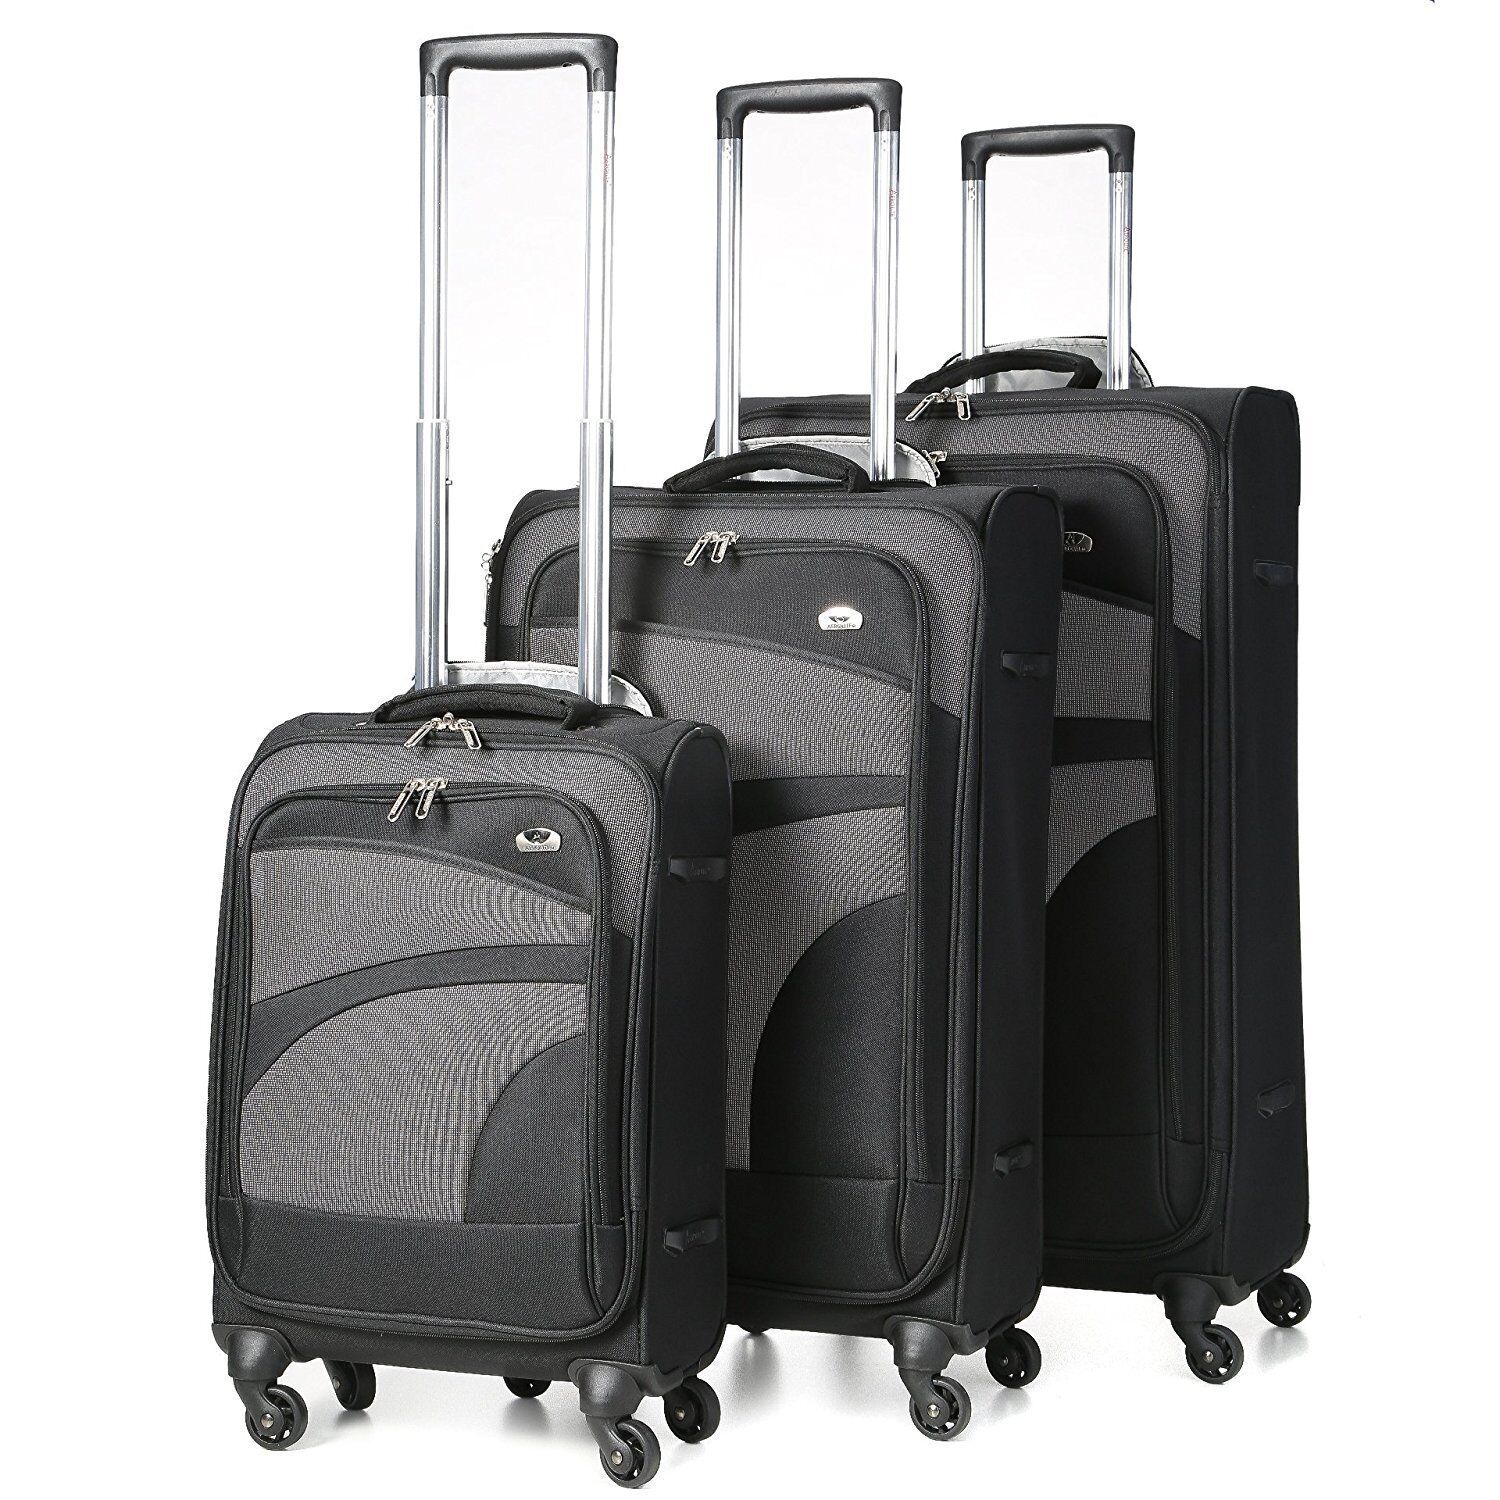 Large lightweight suitcase wheels